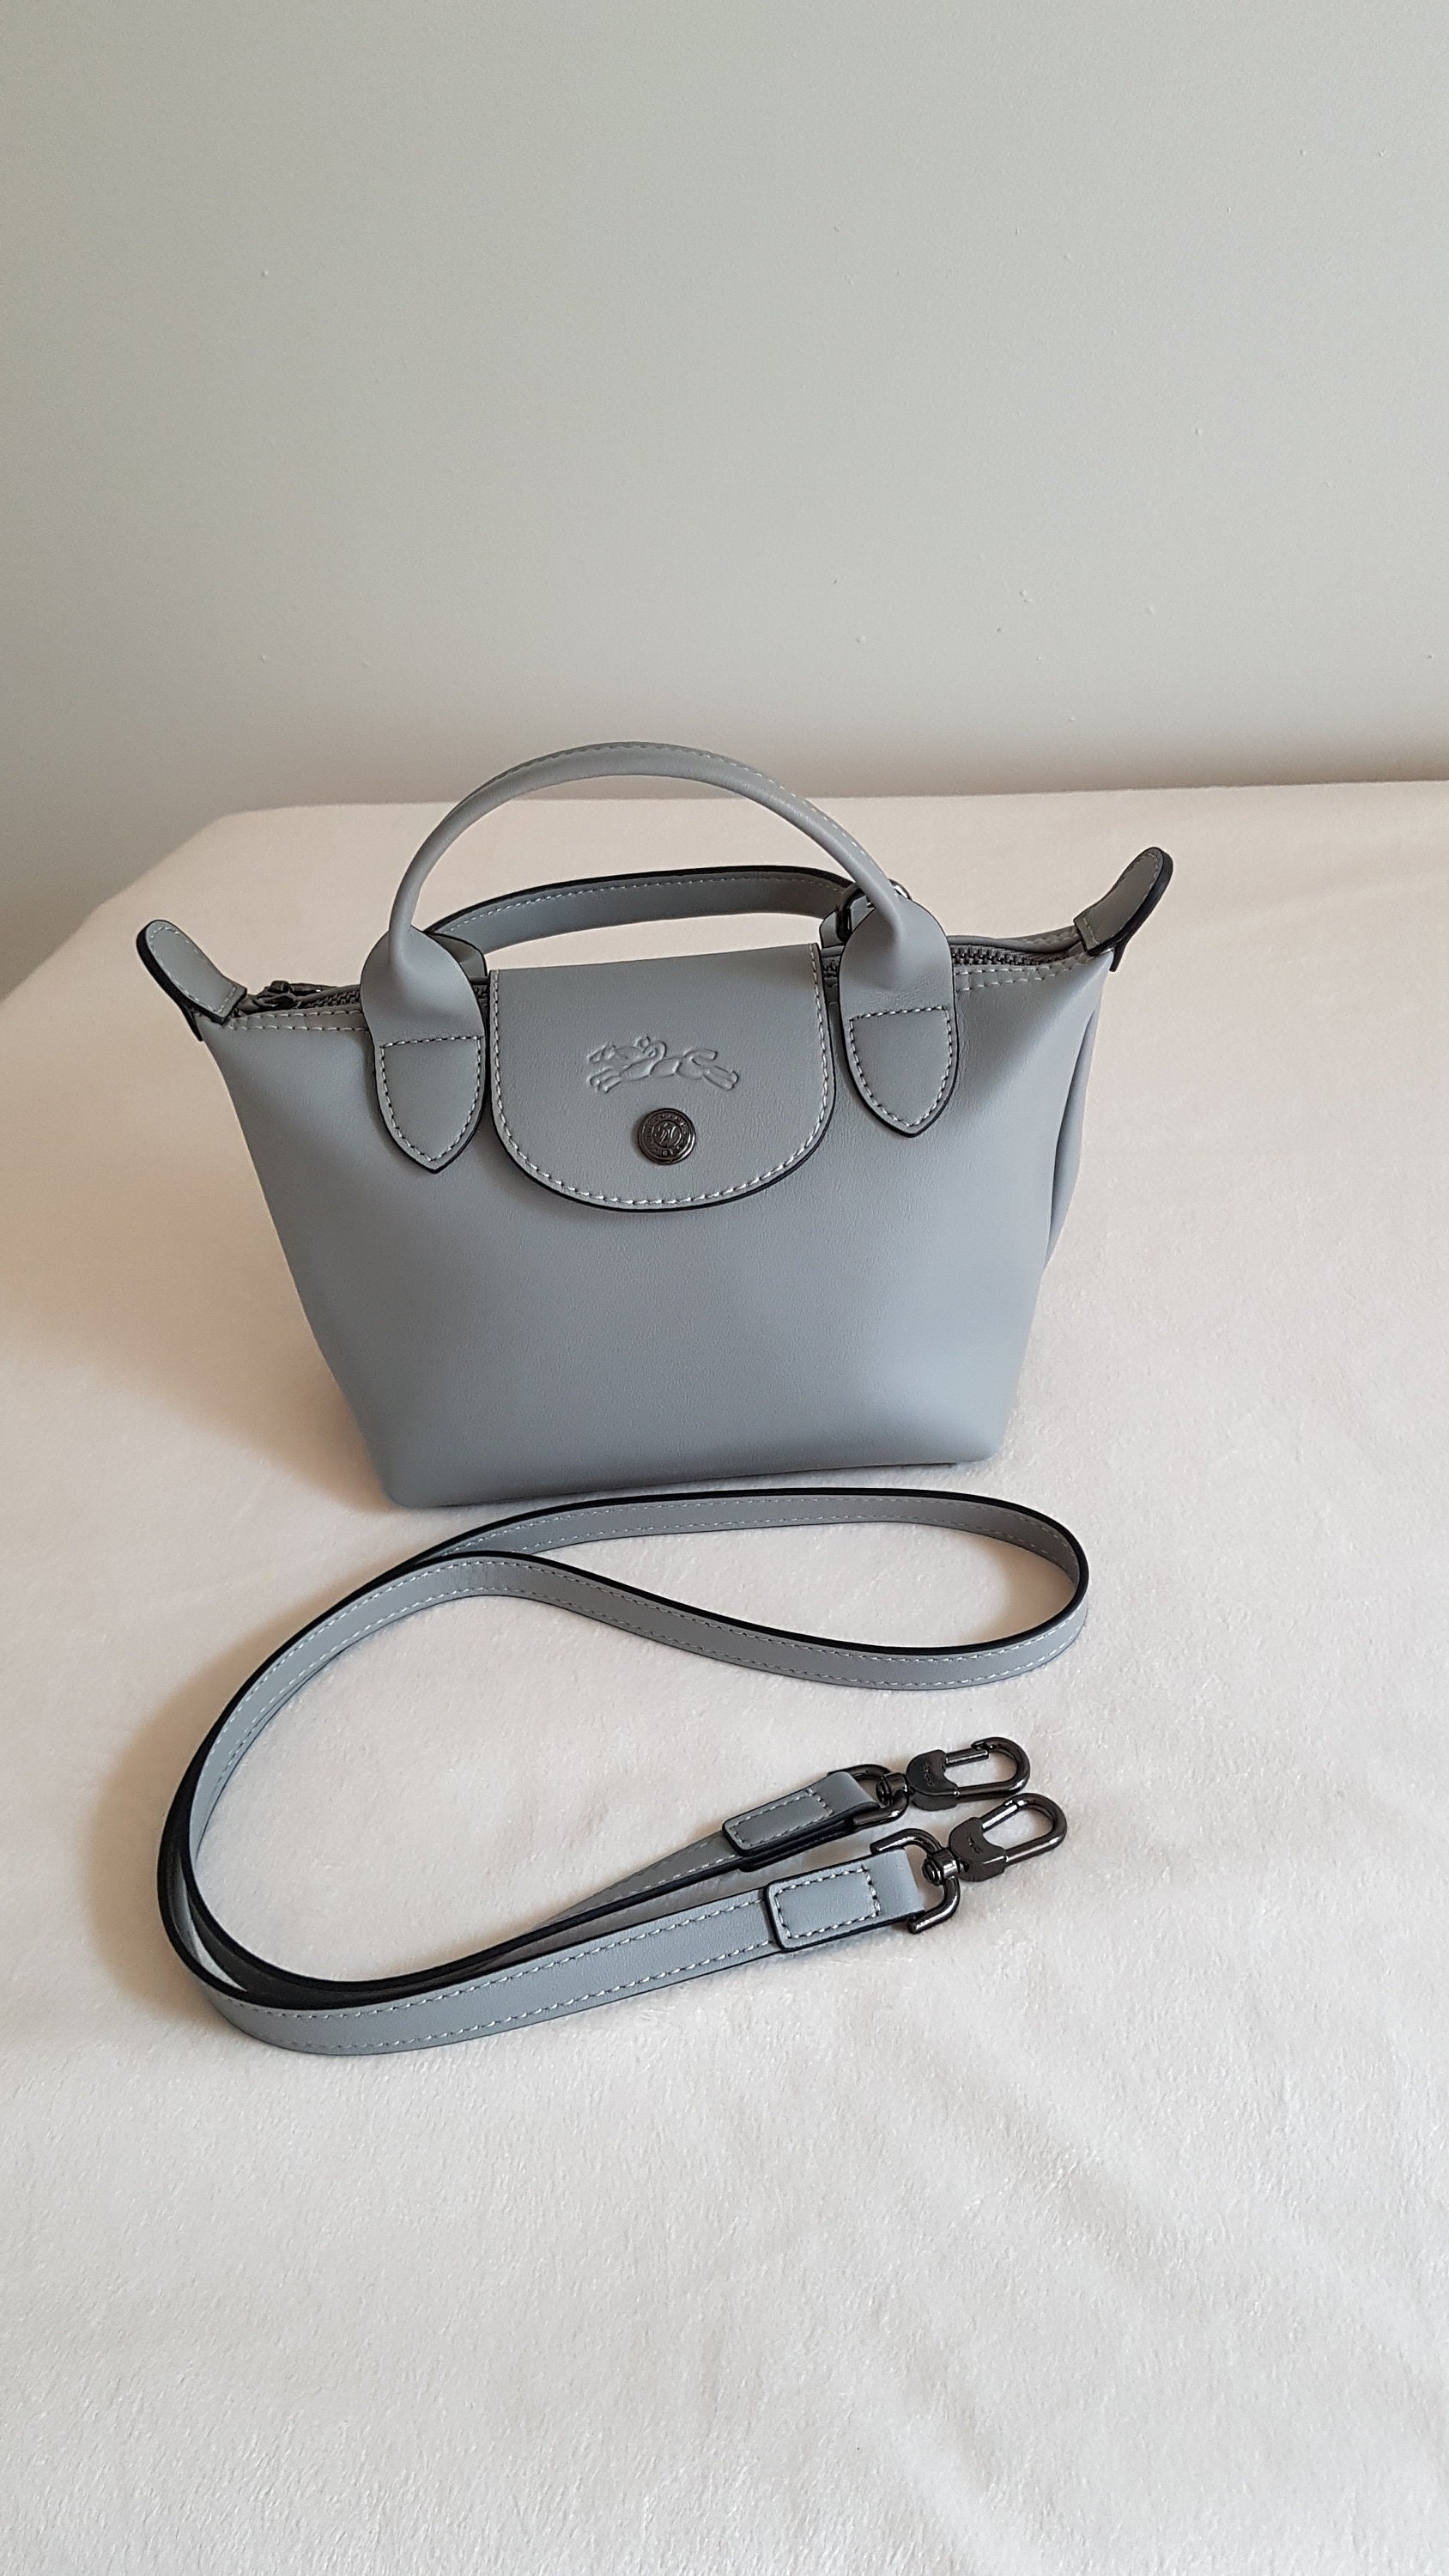 Longchamp Le Pliage Cuir XS Leather Handbag with Strap